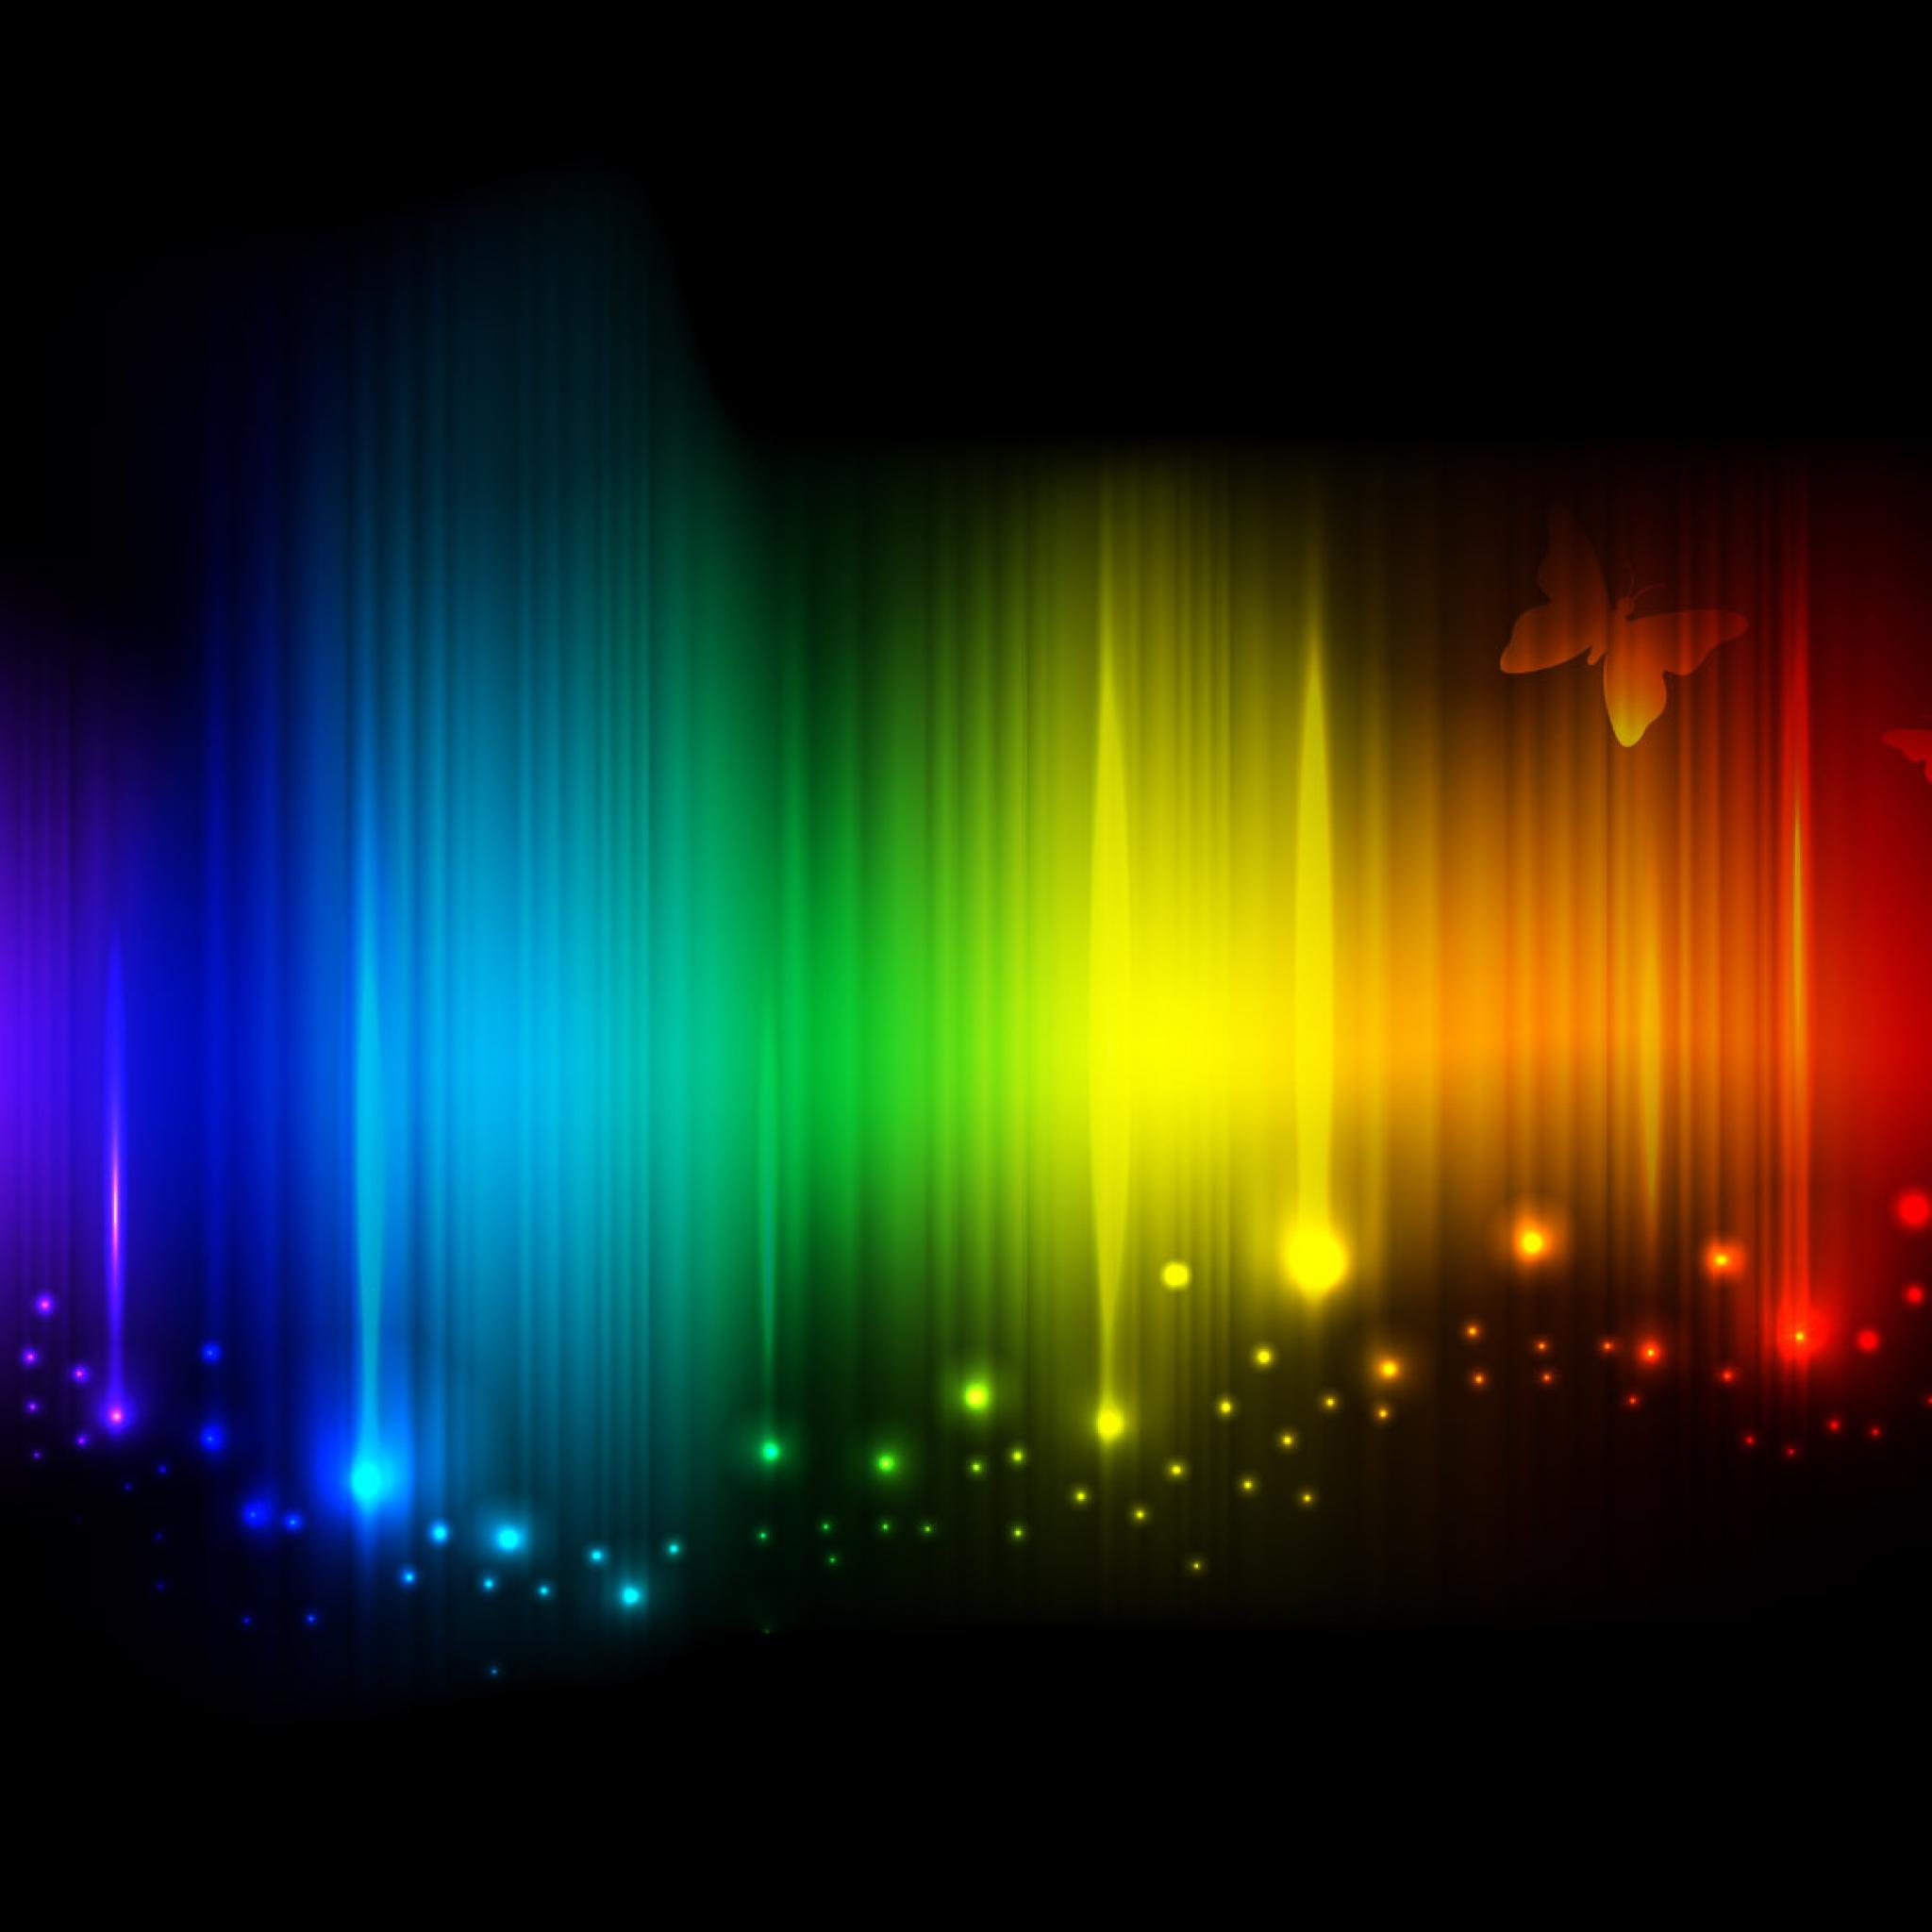 Wallpaper Schmetterlinge Spectrum Rainbow Sparkle Computer Wallpapers Hd Ipad タブレット壁紙ギャラリー